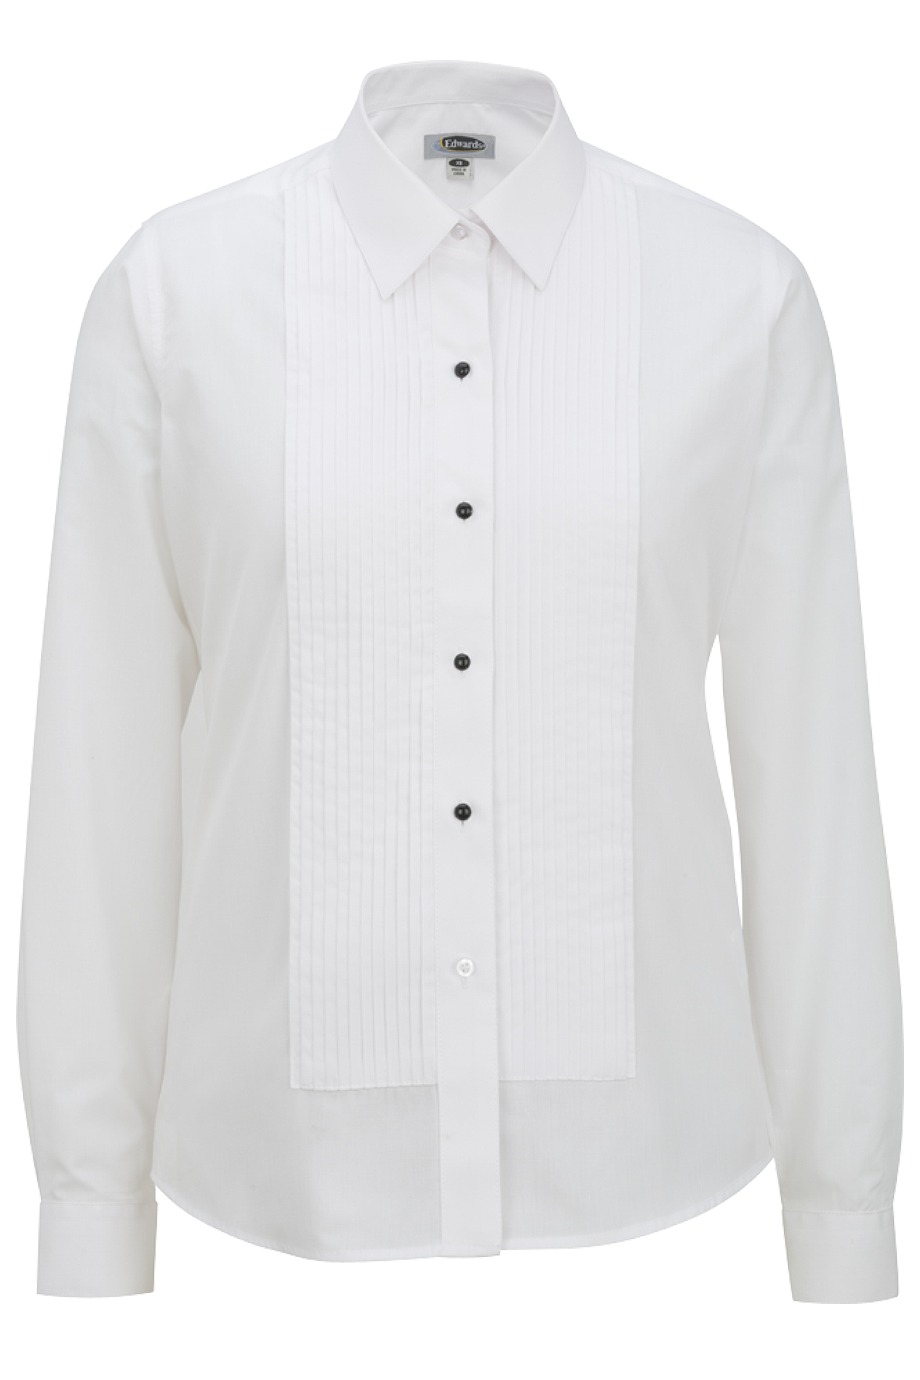 Edwards Garment 5393 - Women's Tuxedo Shirt Quarter Pleat